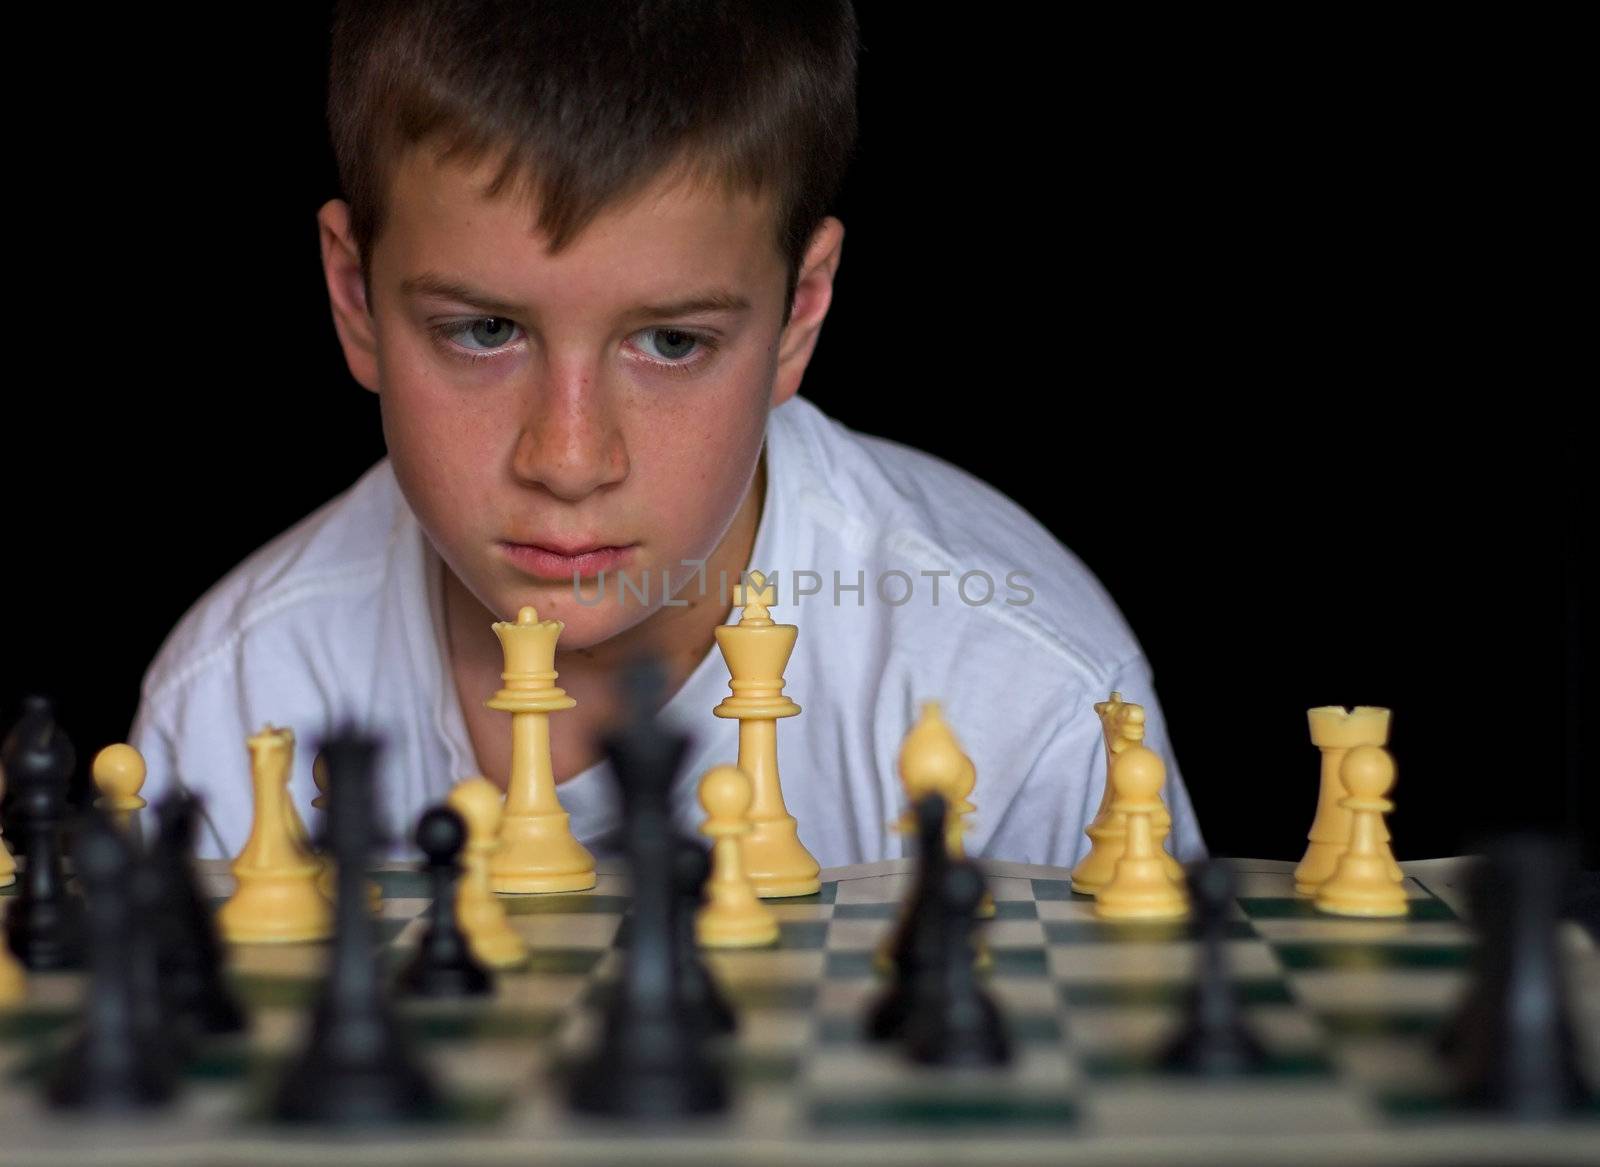 Boy Playing Chess by sbonk